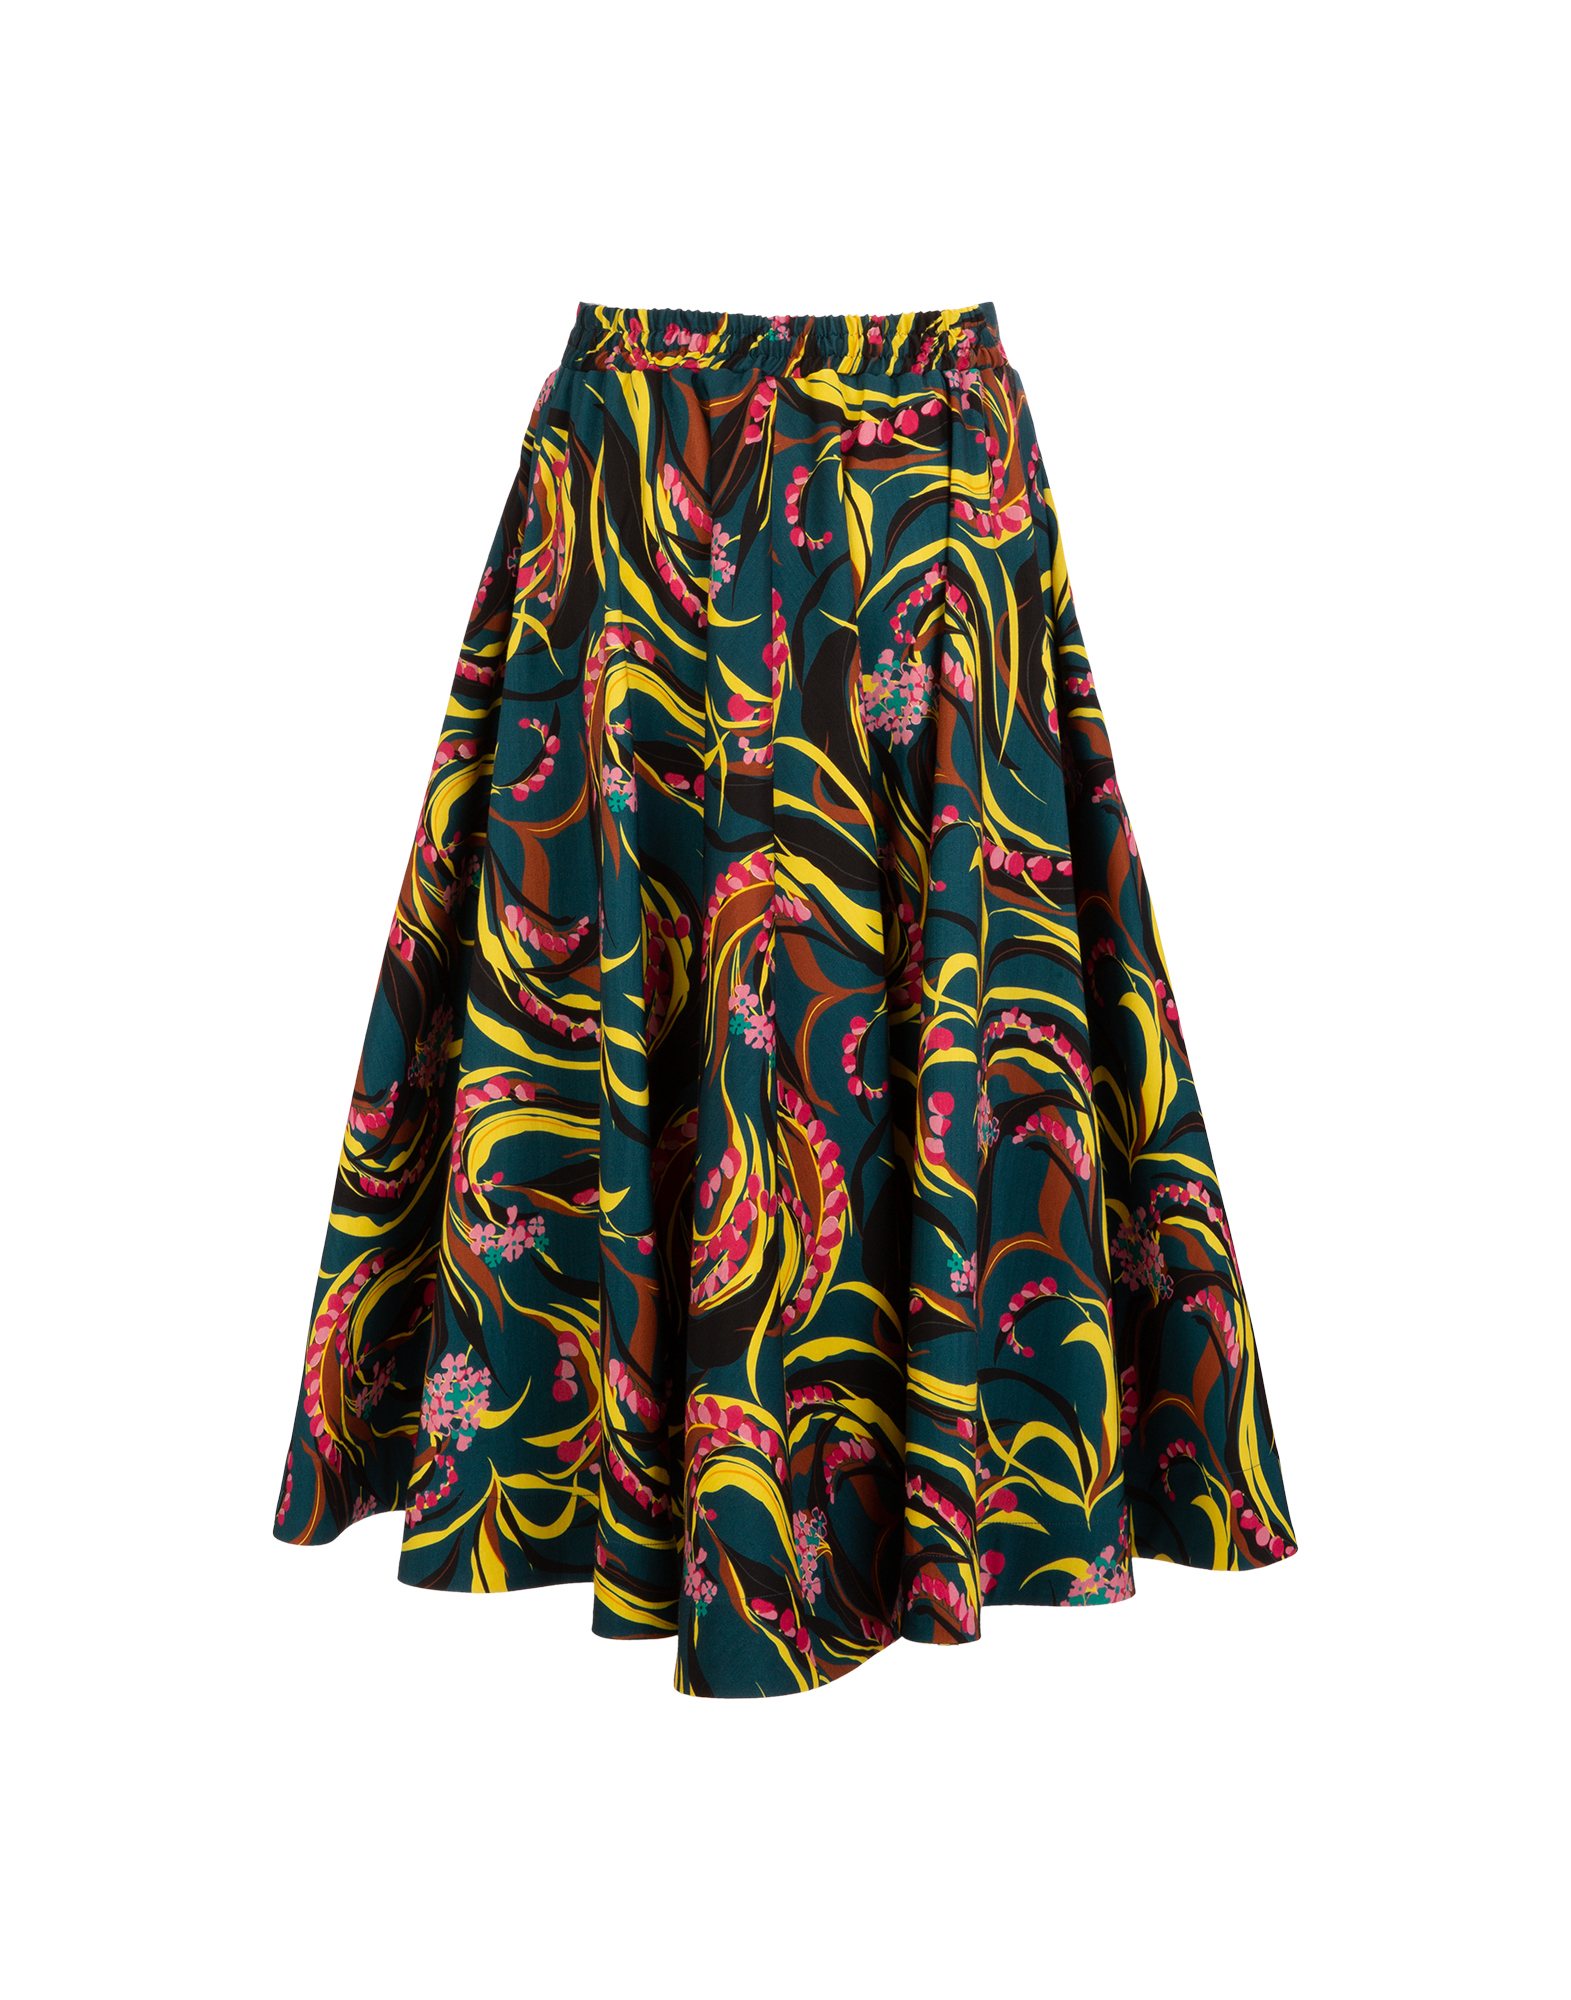 La DoubleJ LDJ Editions Clothing - Skirts | La DoubleJ - Circle Skirt